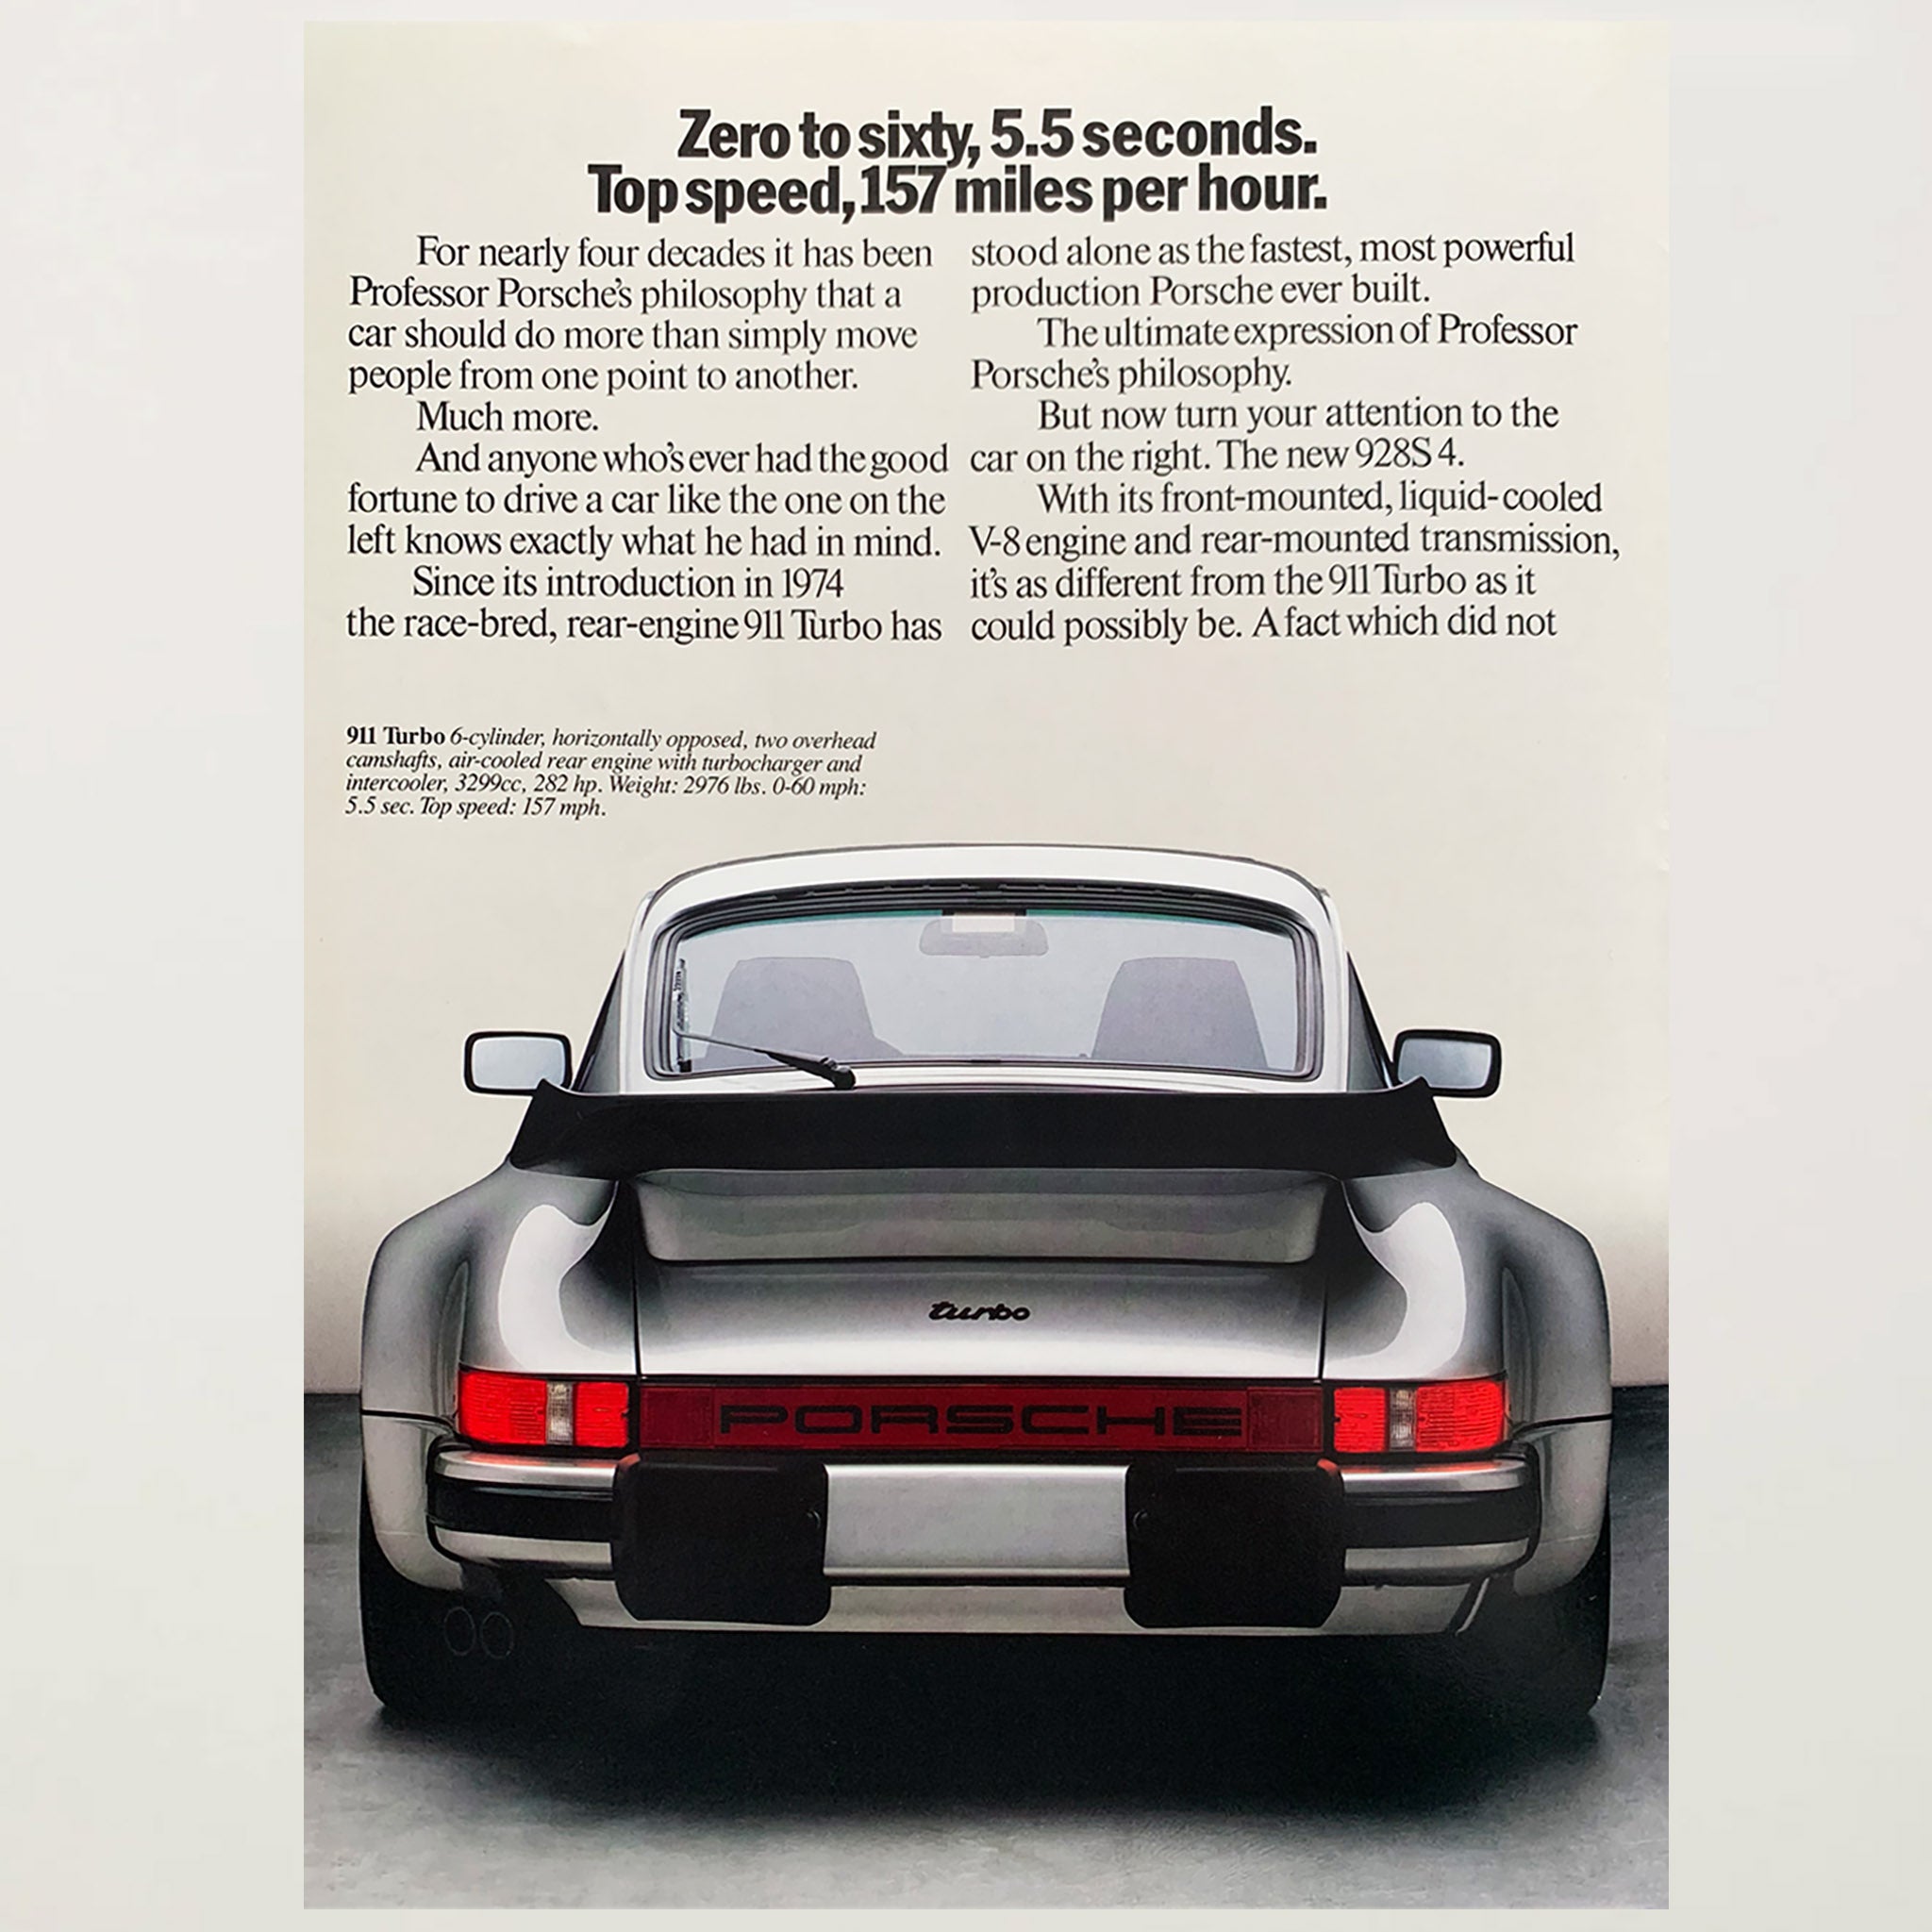 Framed Porsche 911 Turbo Advertisement